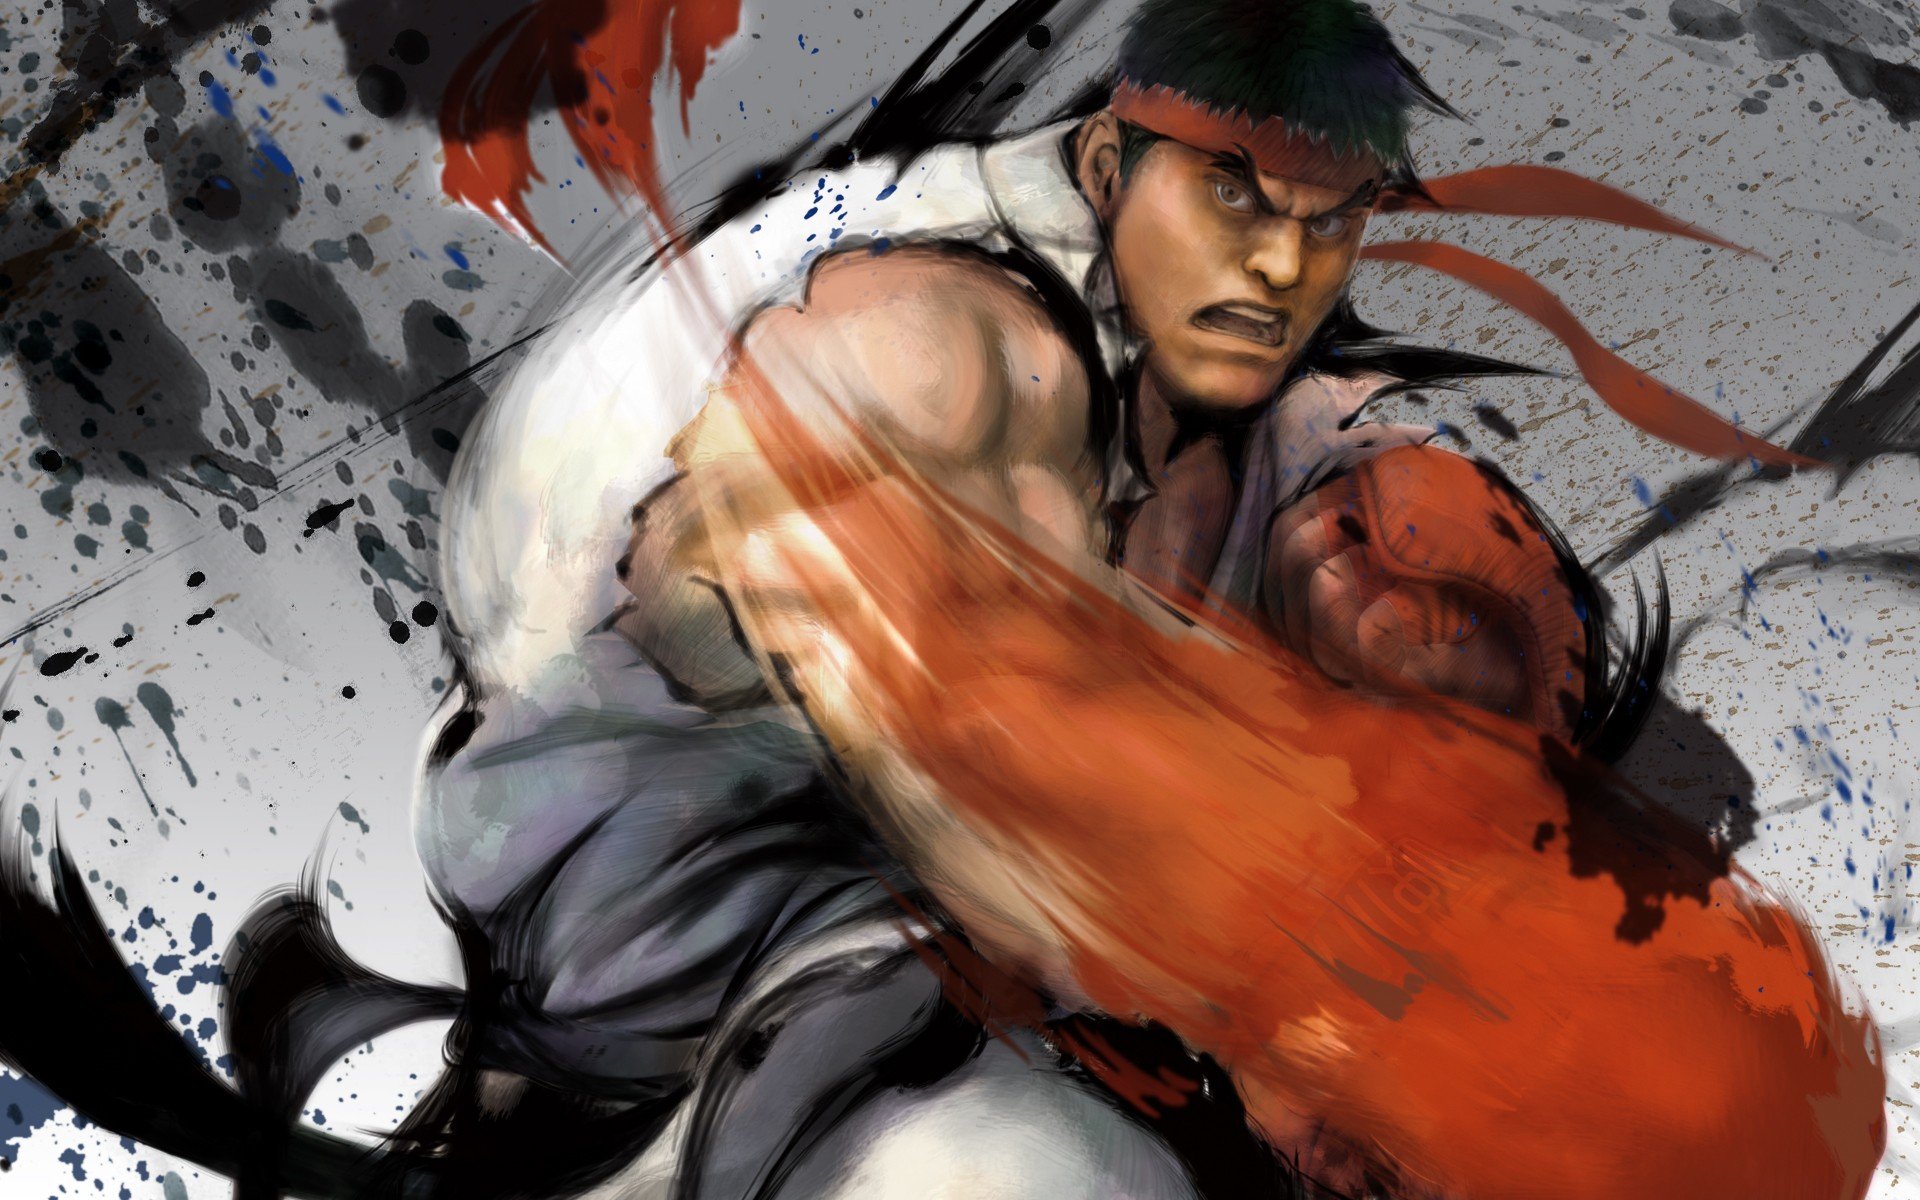 Ryu (Street Fighter), Street Fighter Wallpaper